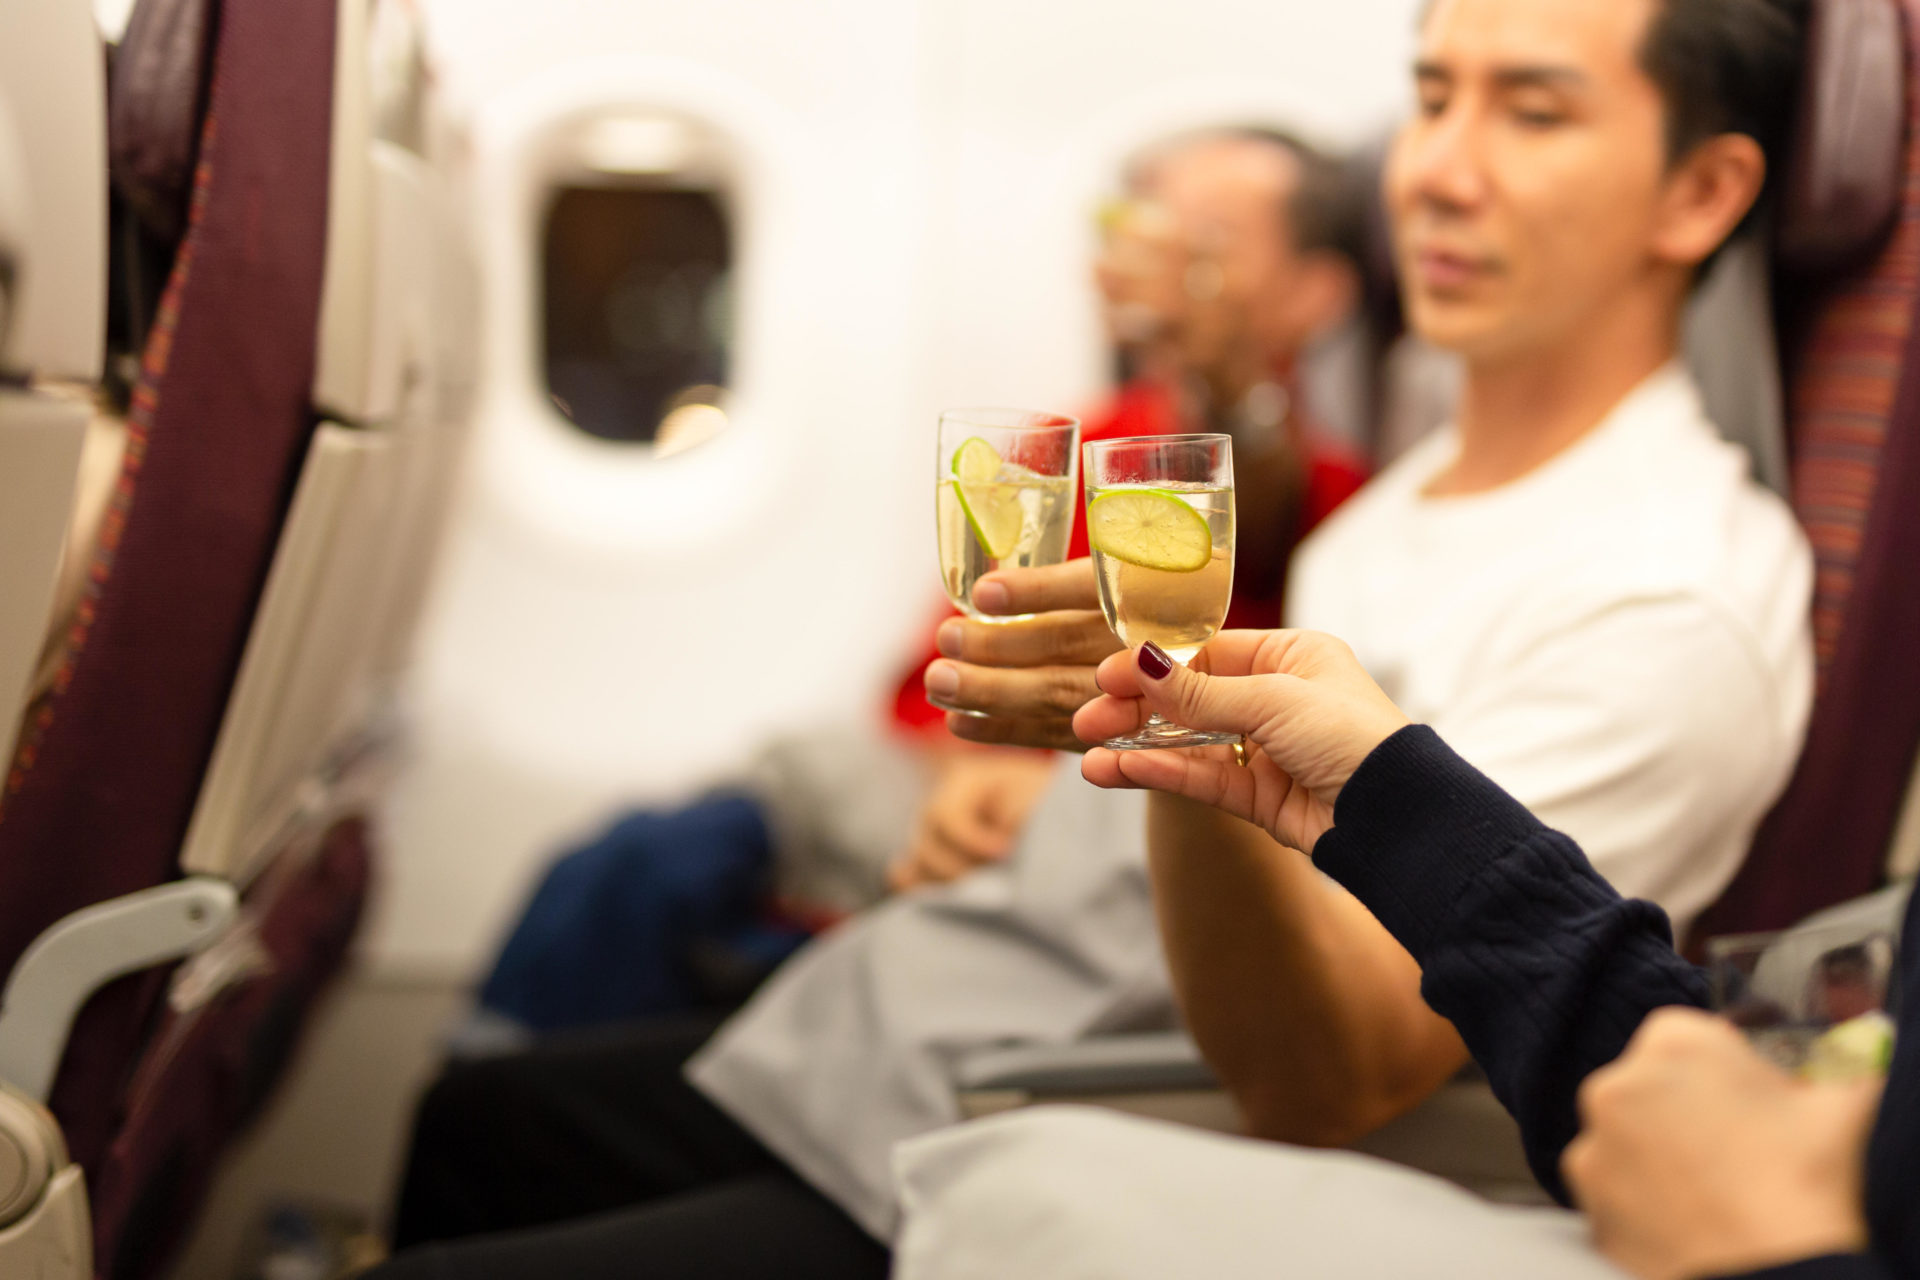 Passengers toasting alcohol on flight. Image: suwinai sukanant / Alamy Stock Photo 